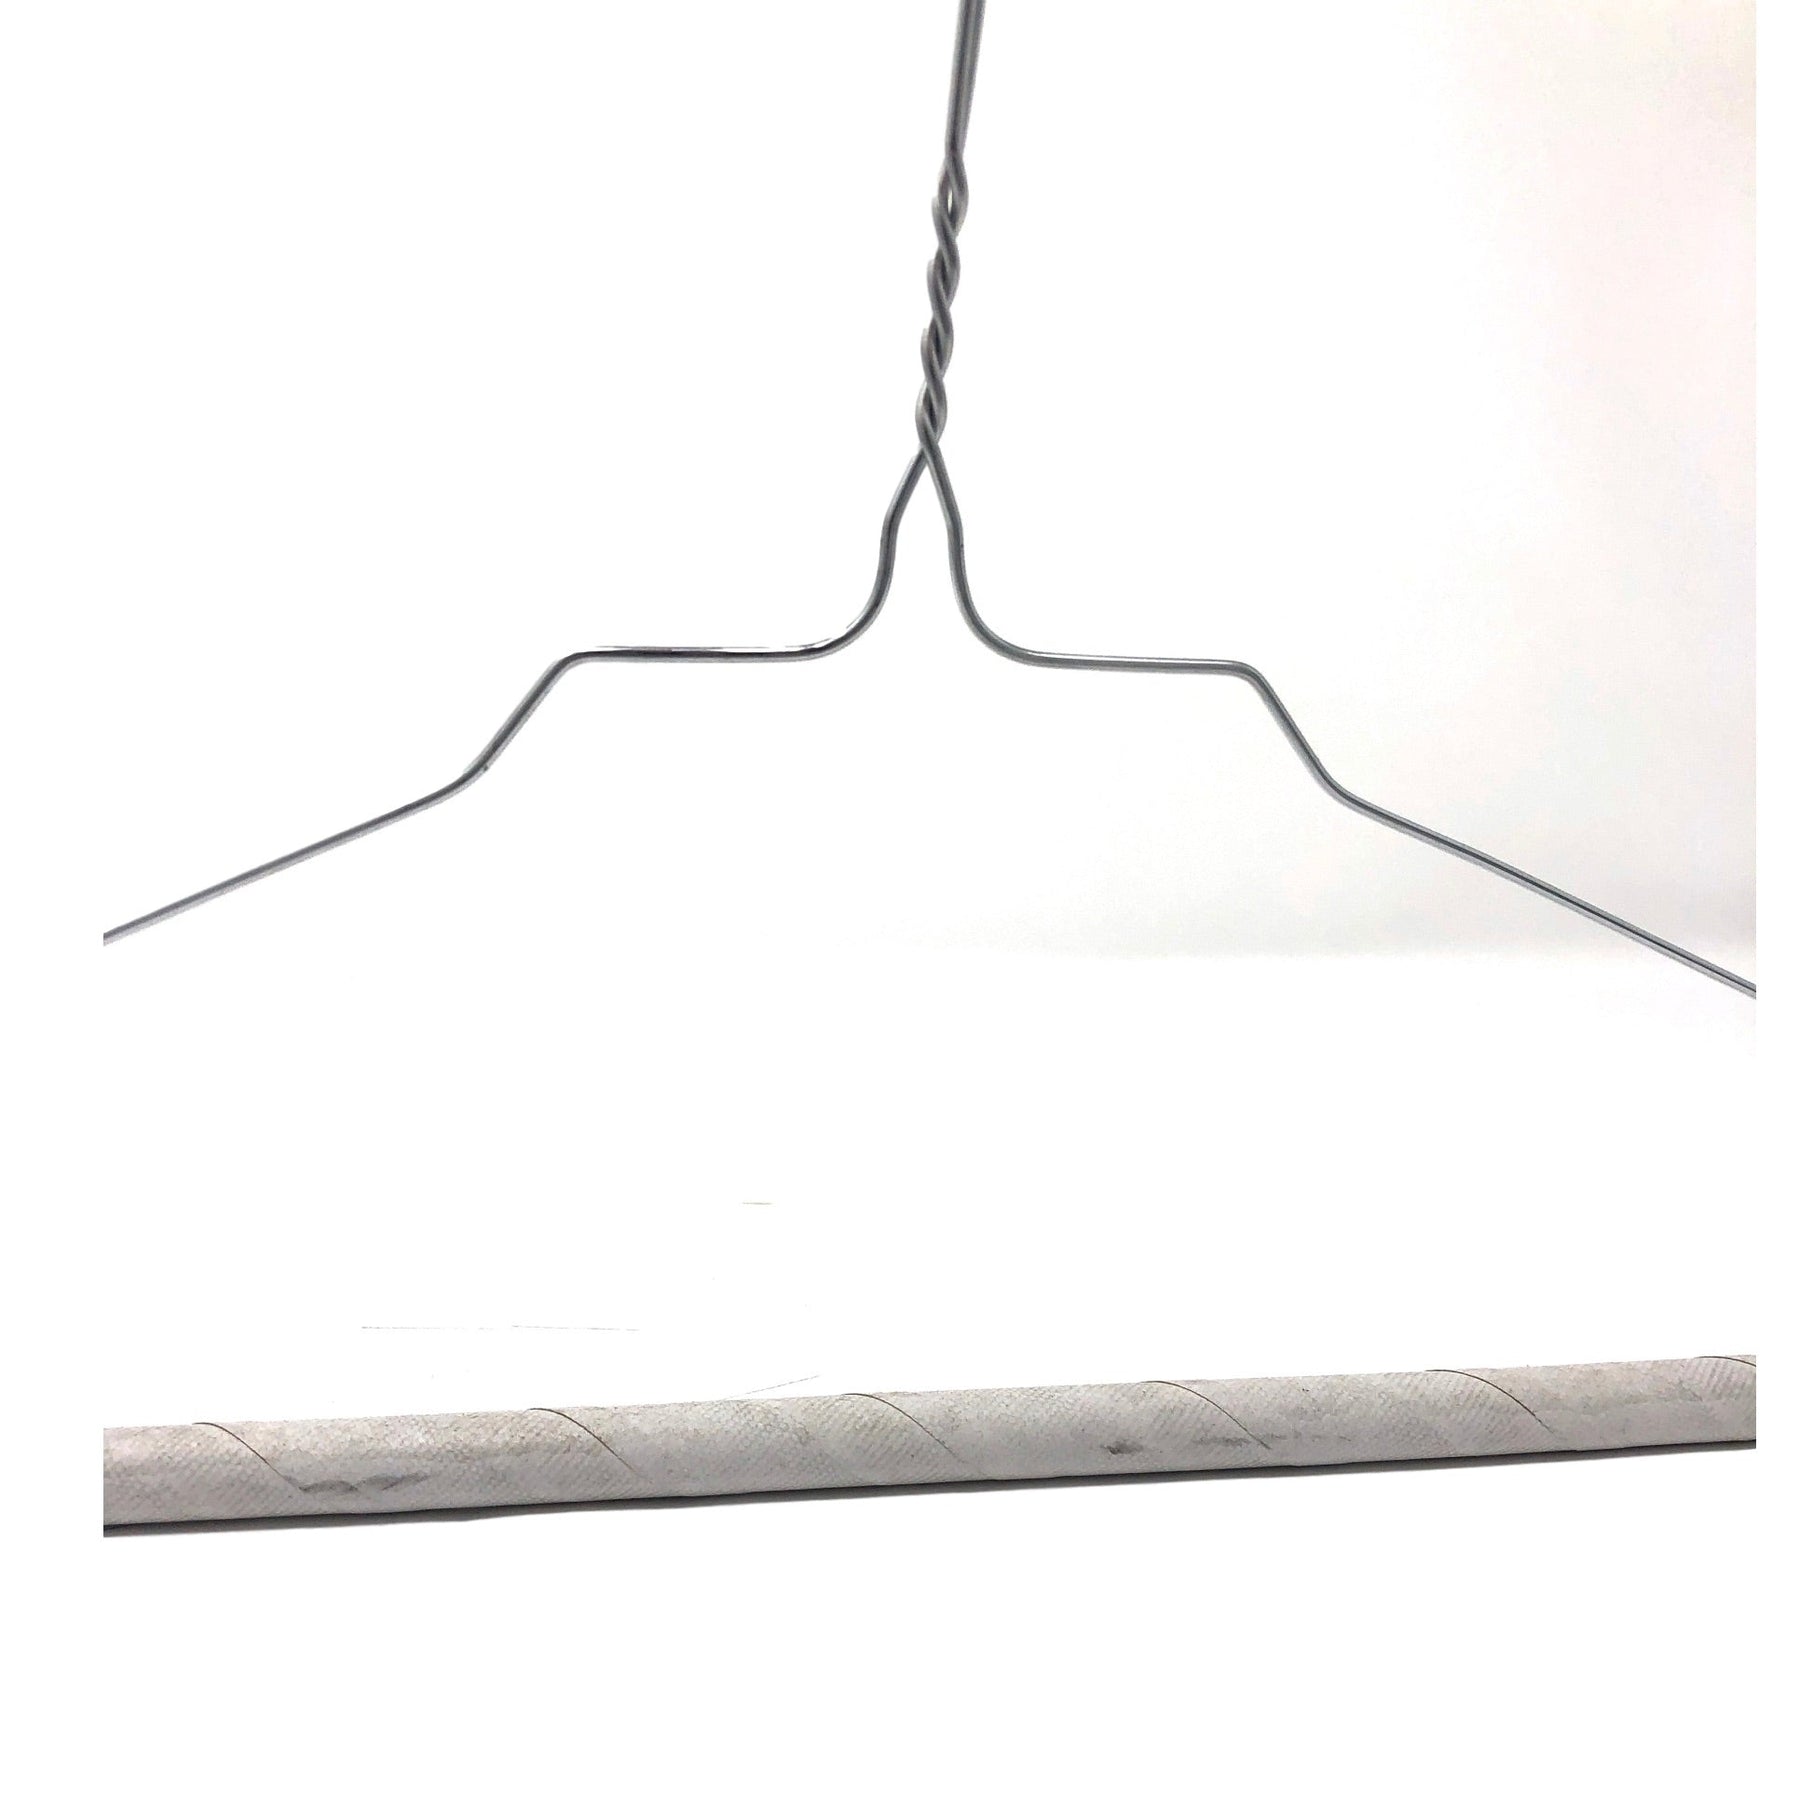 Commercial Grade Metal Shirt Hangers - 18 Length/ 14.5 Gauge - 500/Box -  Galvanized - Cleaner's Supply